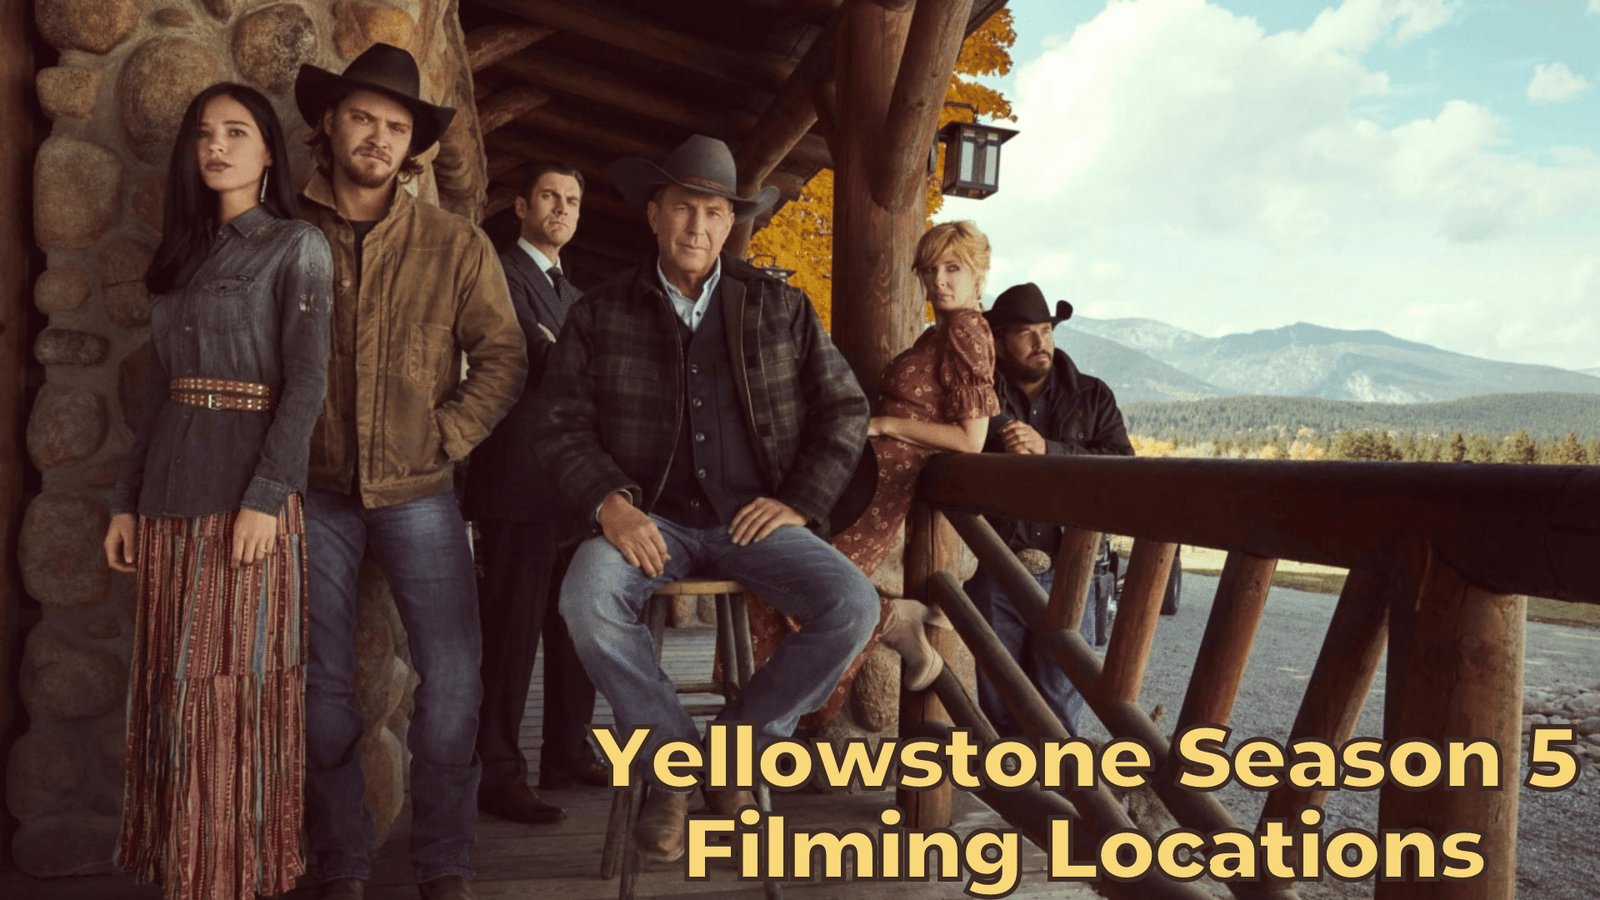 Yellowstone Season 5 Filming Locations